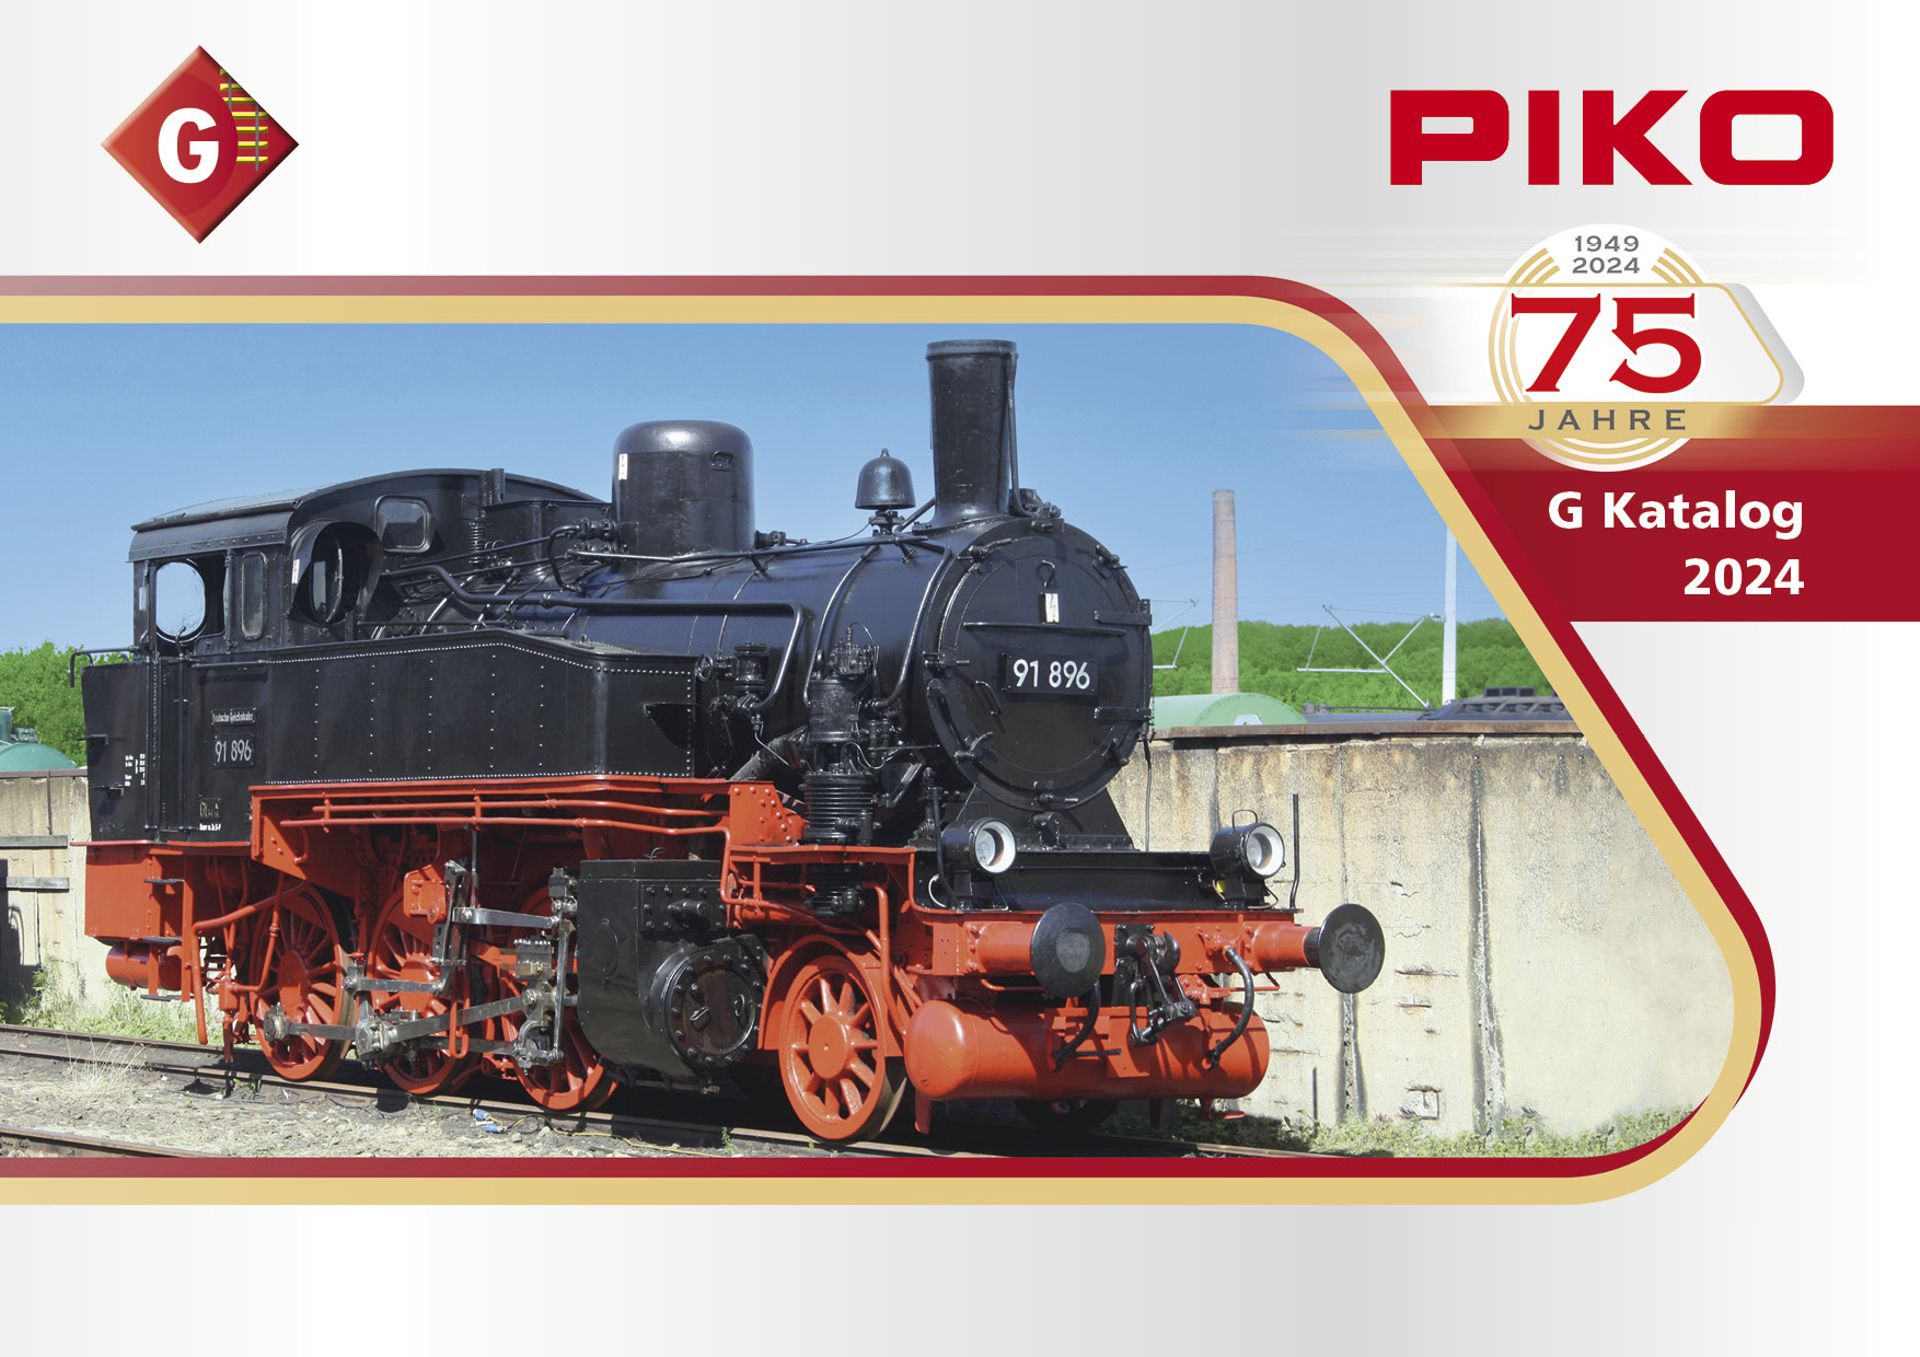 Piko 99704 - Gartenbahn-Katalog 2024